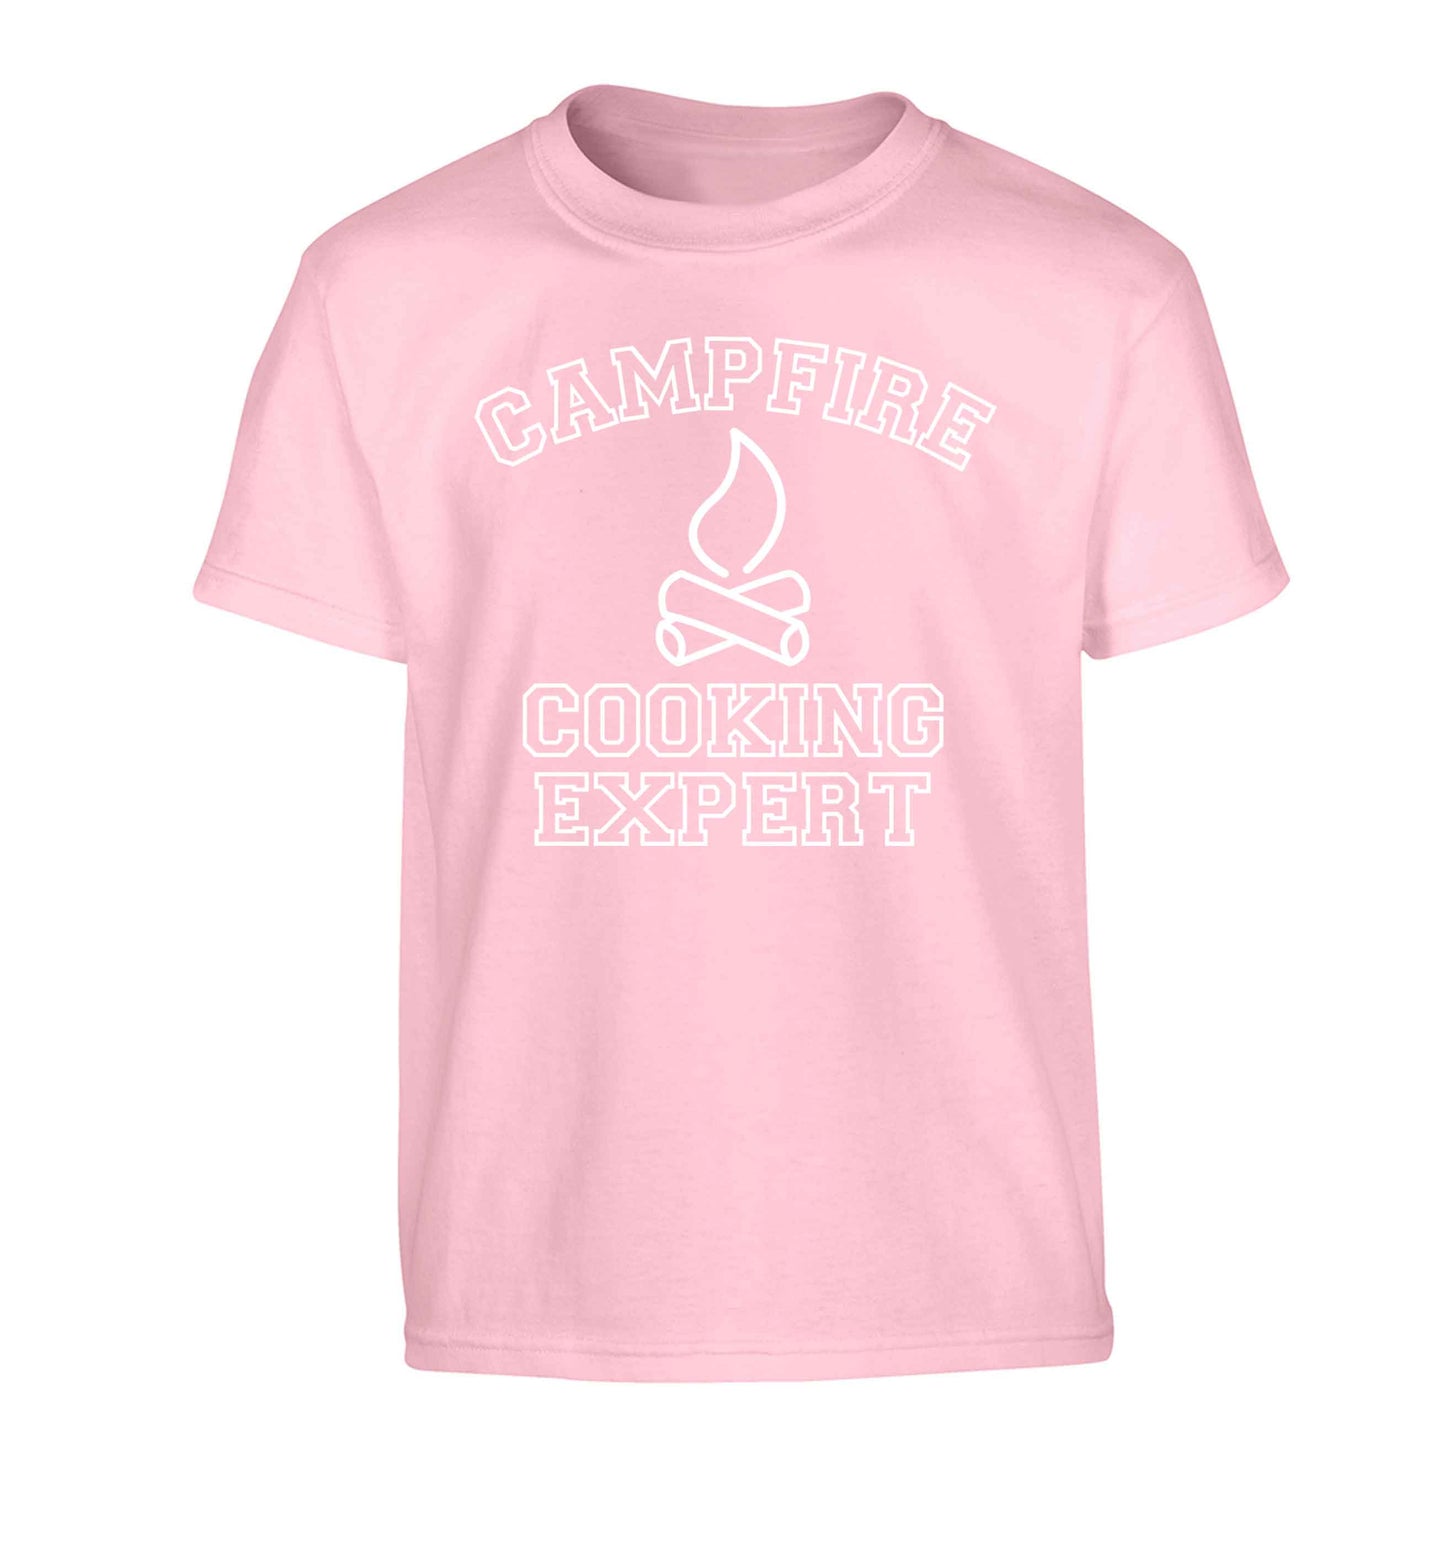 Campfire cooking expert Children's light pink Tshirt 12-13 Years